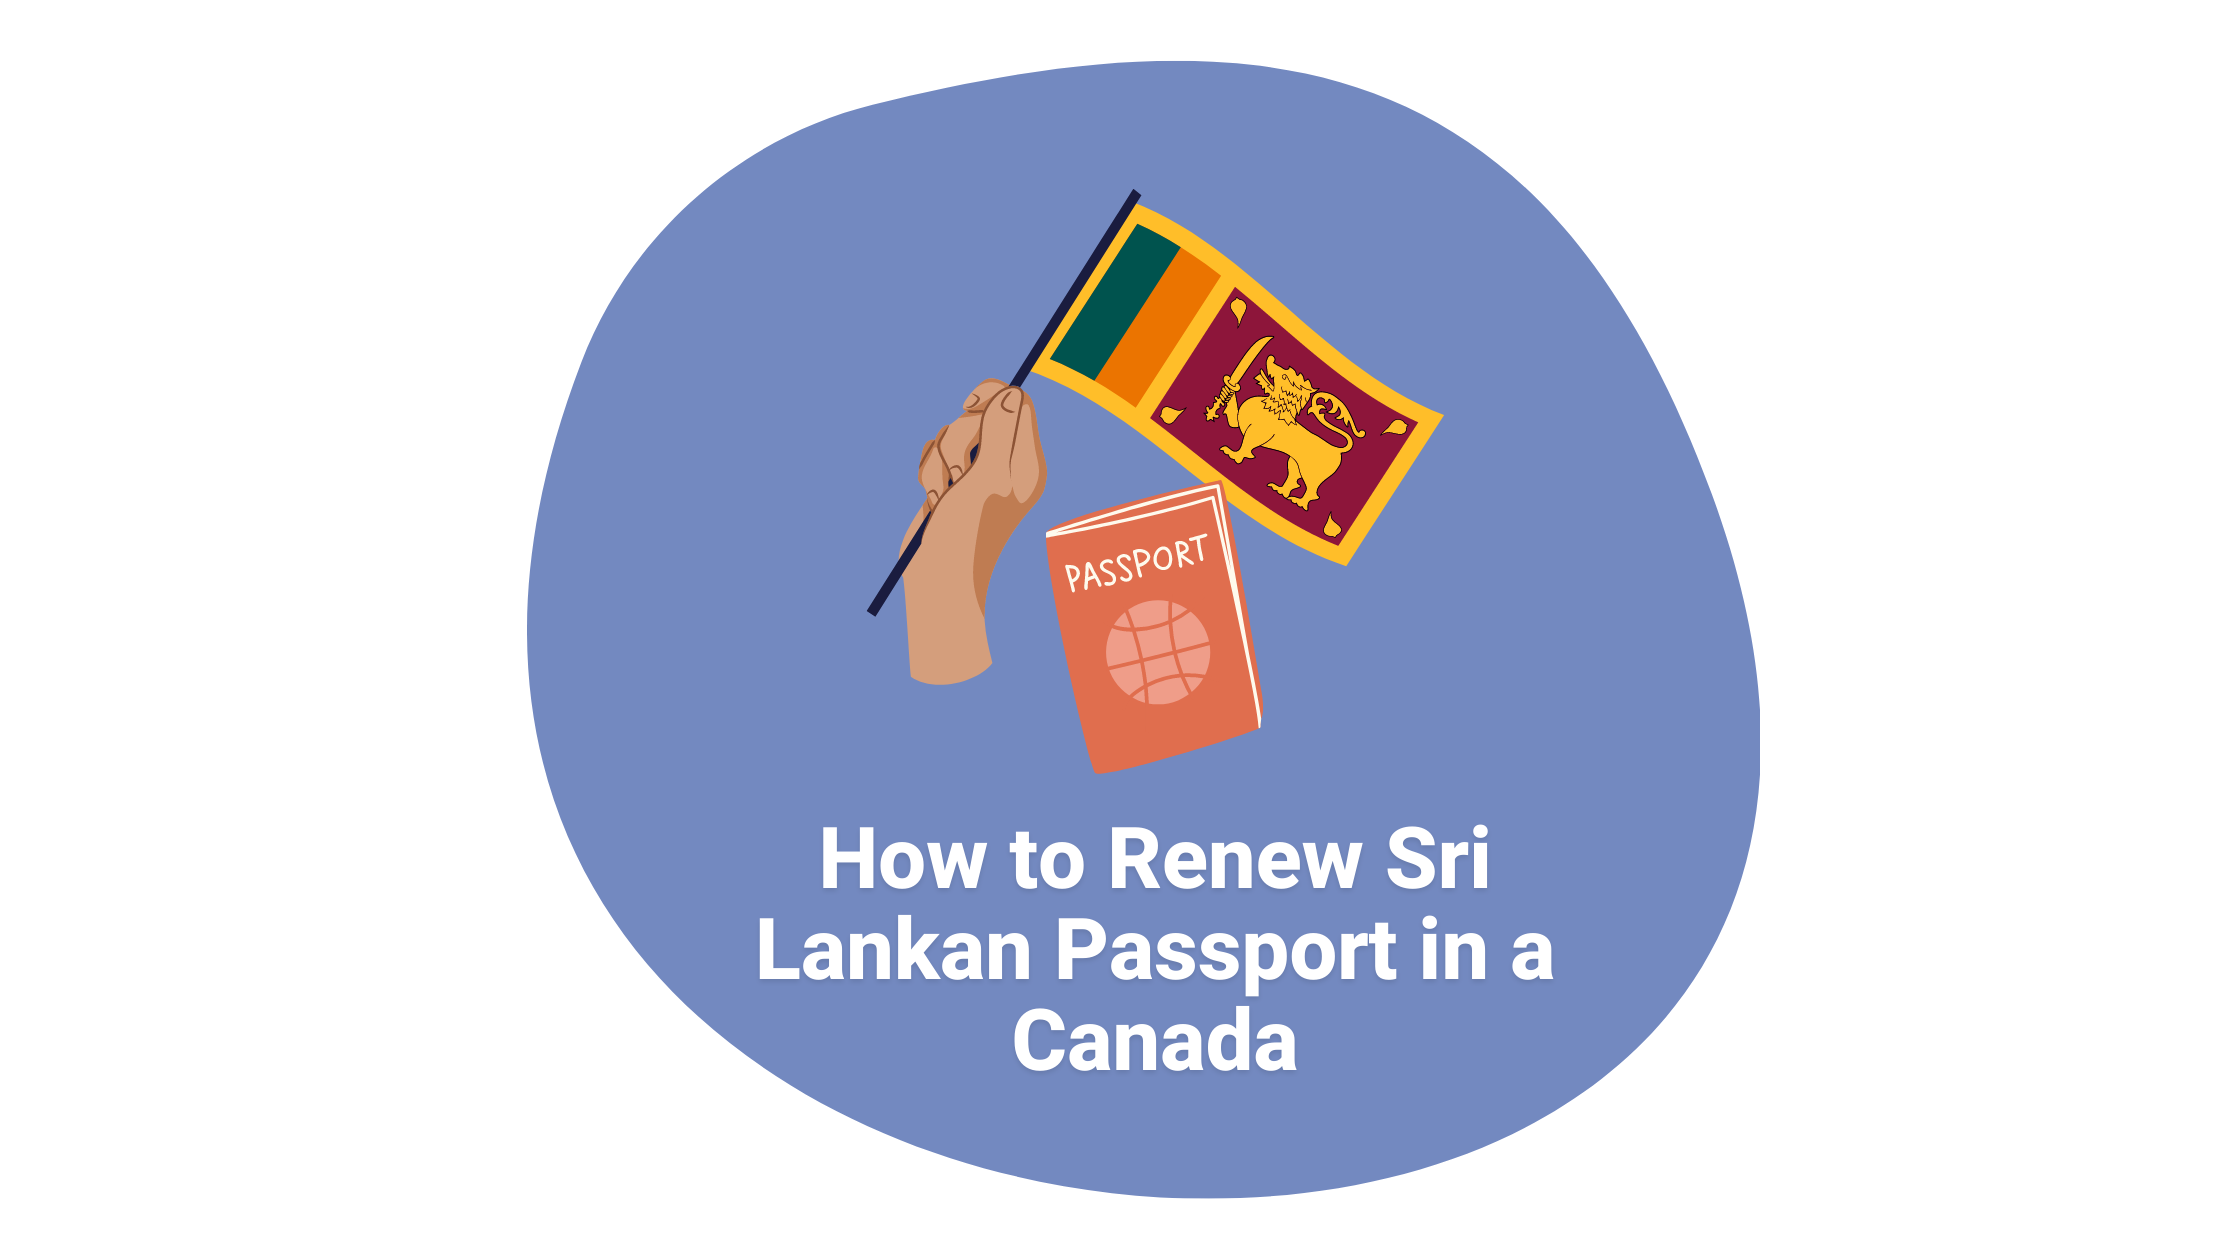 How to Renew Sri Lankan Passport in Canada